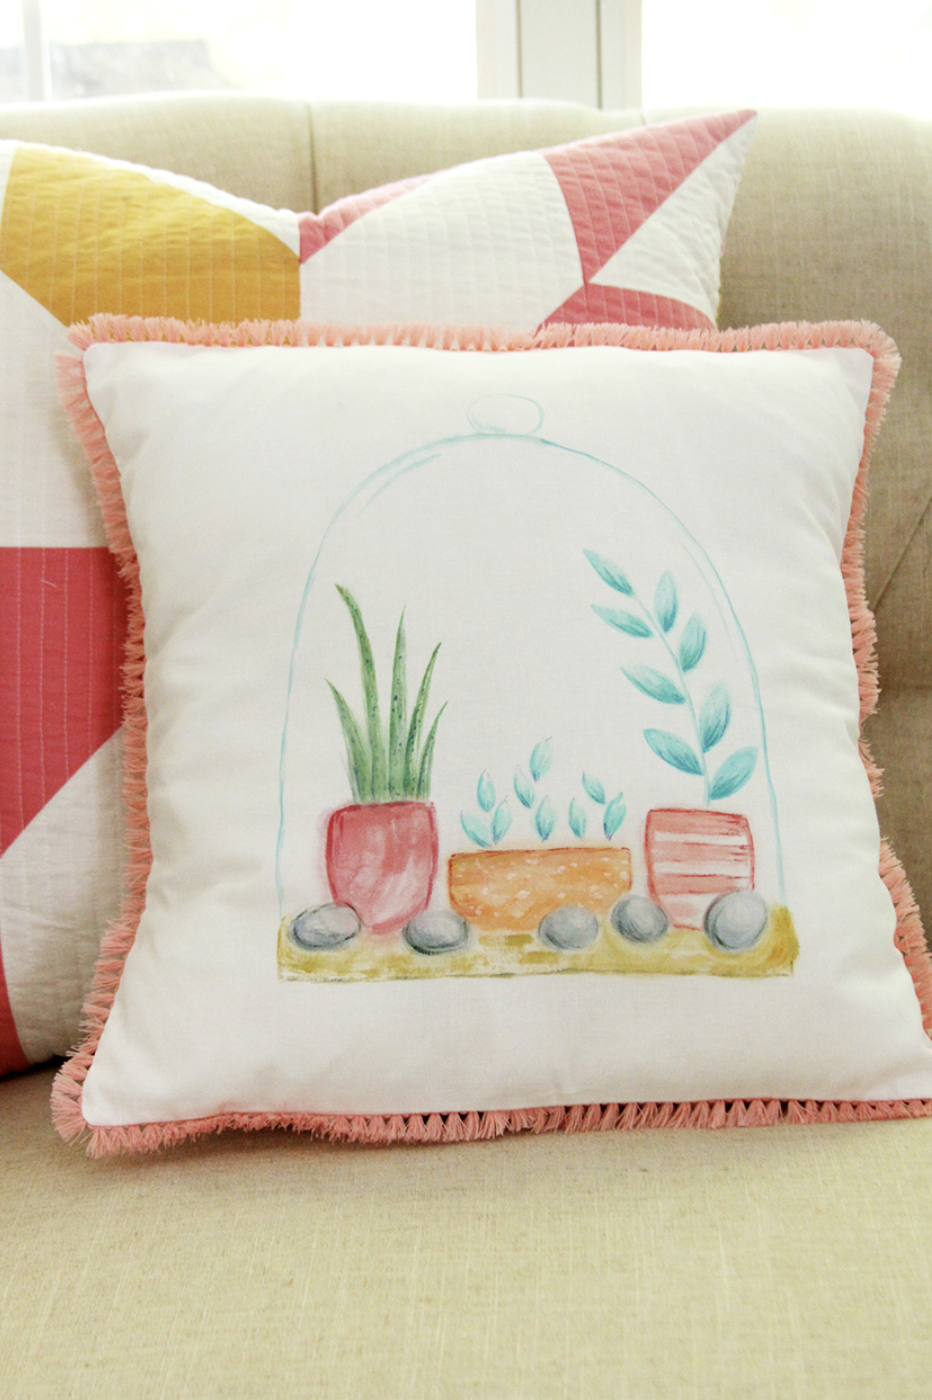 Earth Day Craft Watercolor Terrarium Pillow on Sofa